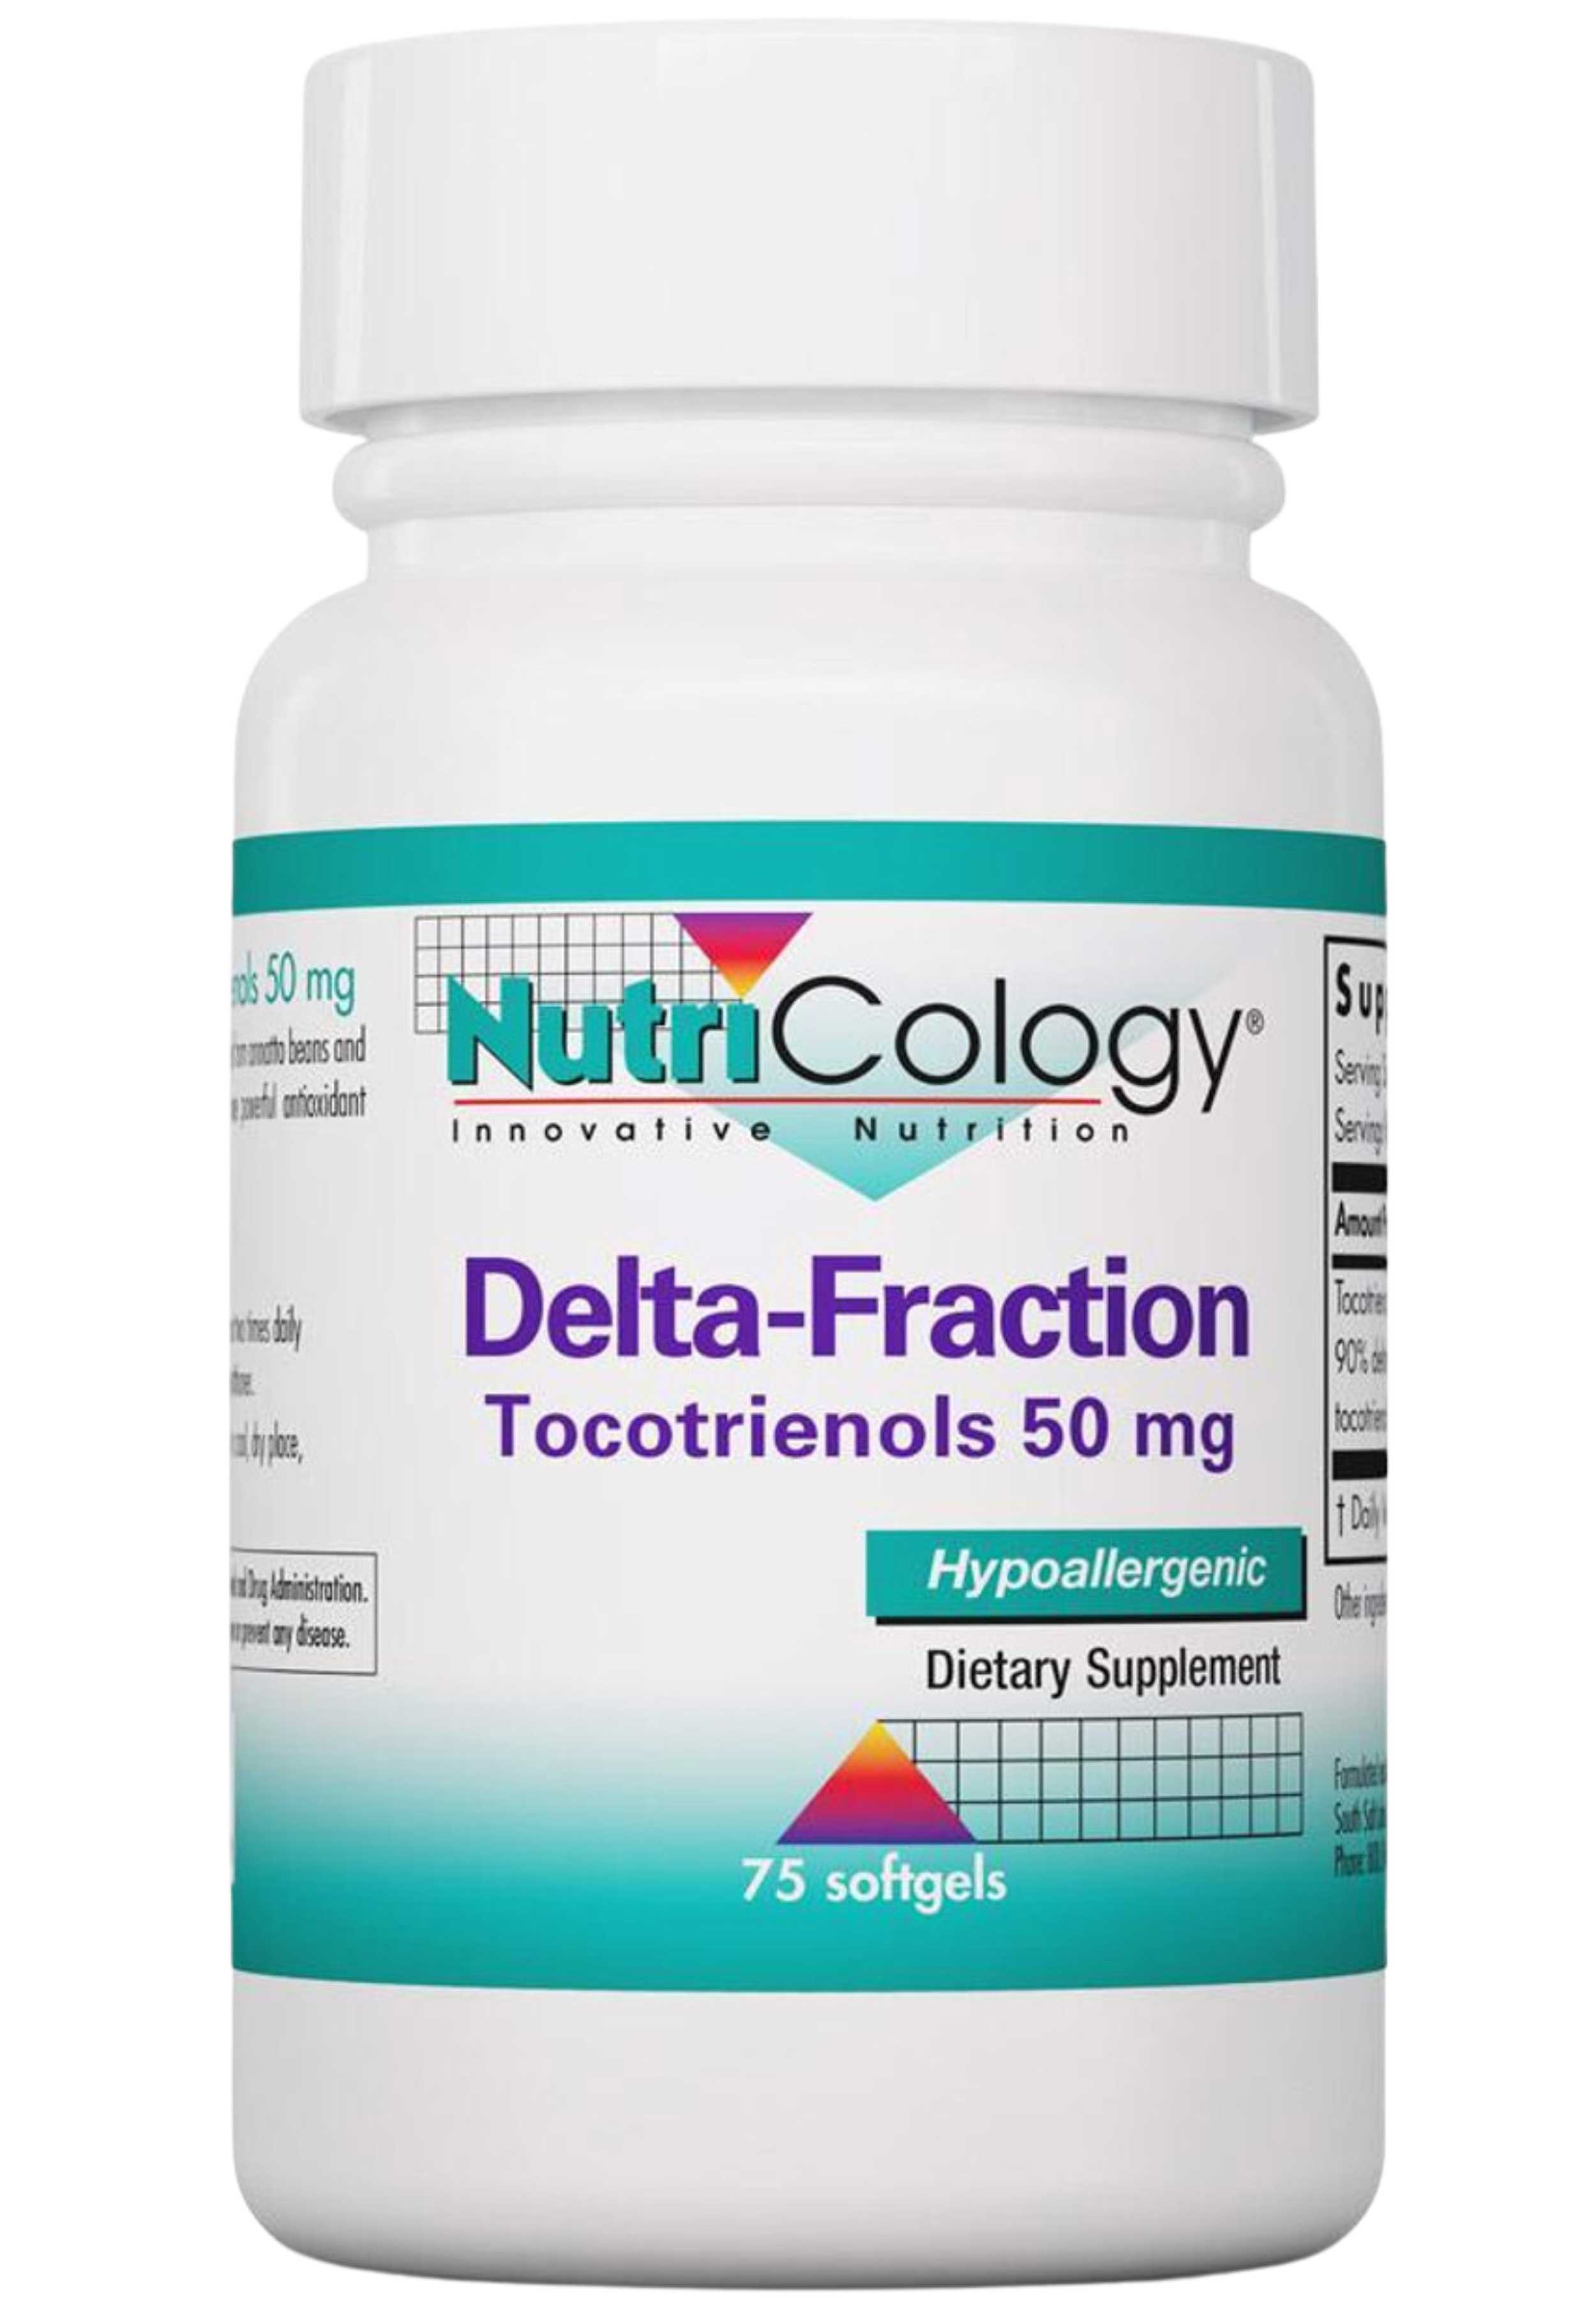 Nutricology Delta-Fraction Tocotrienols